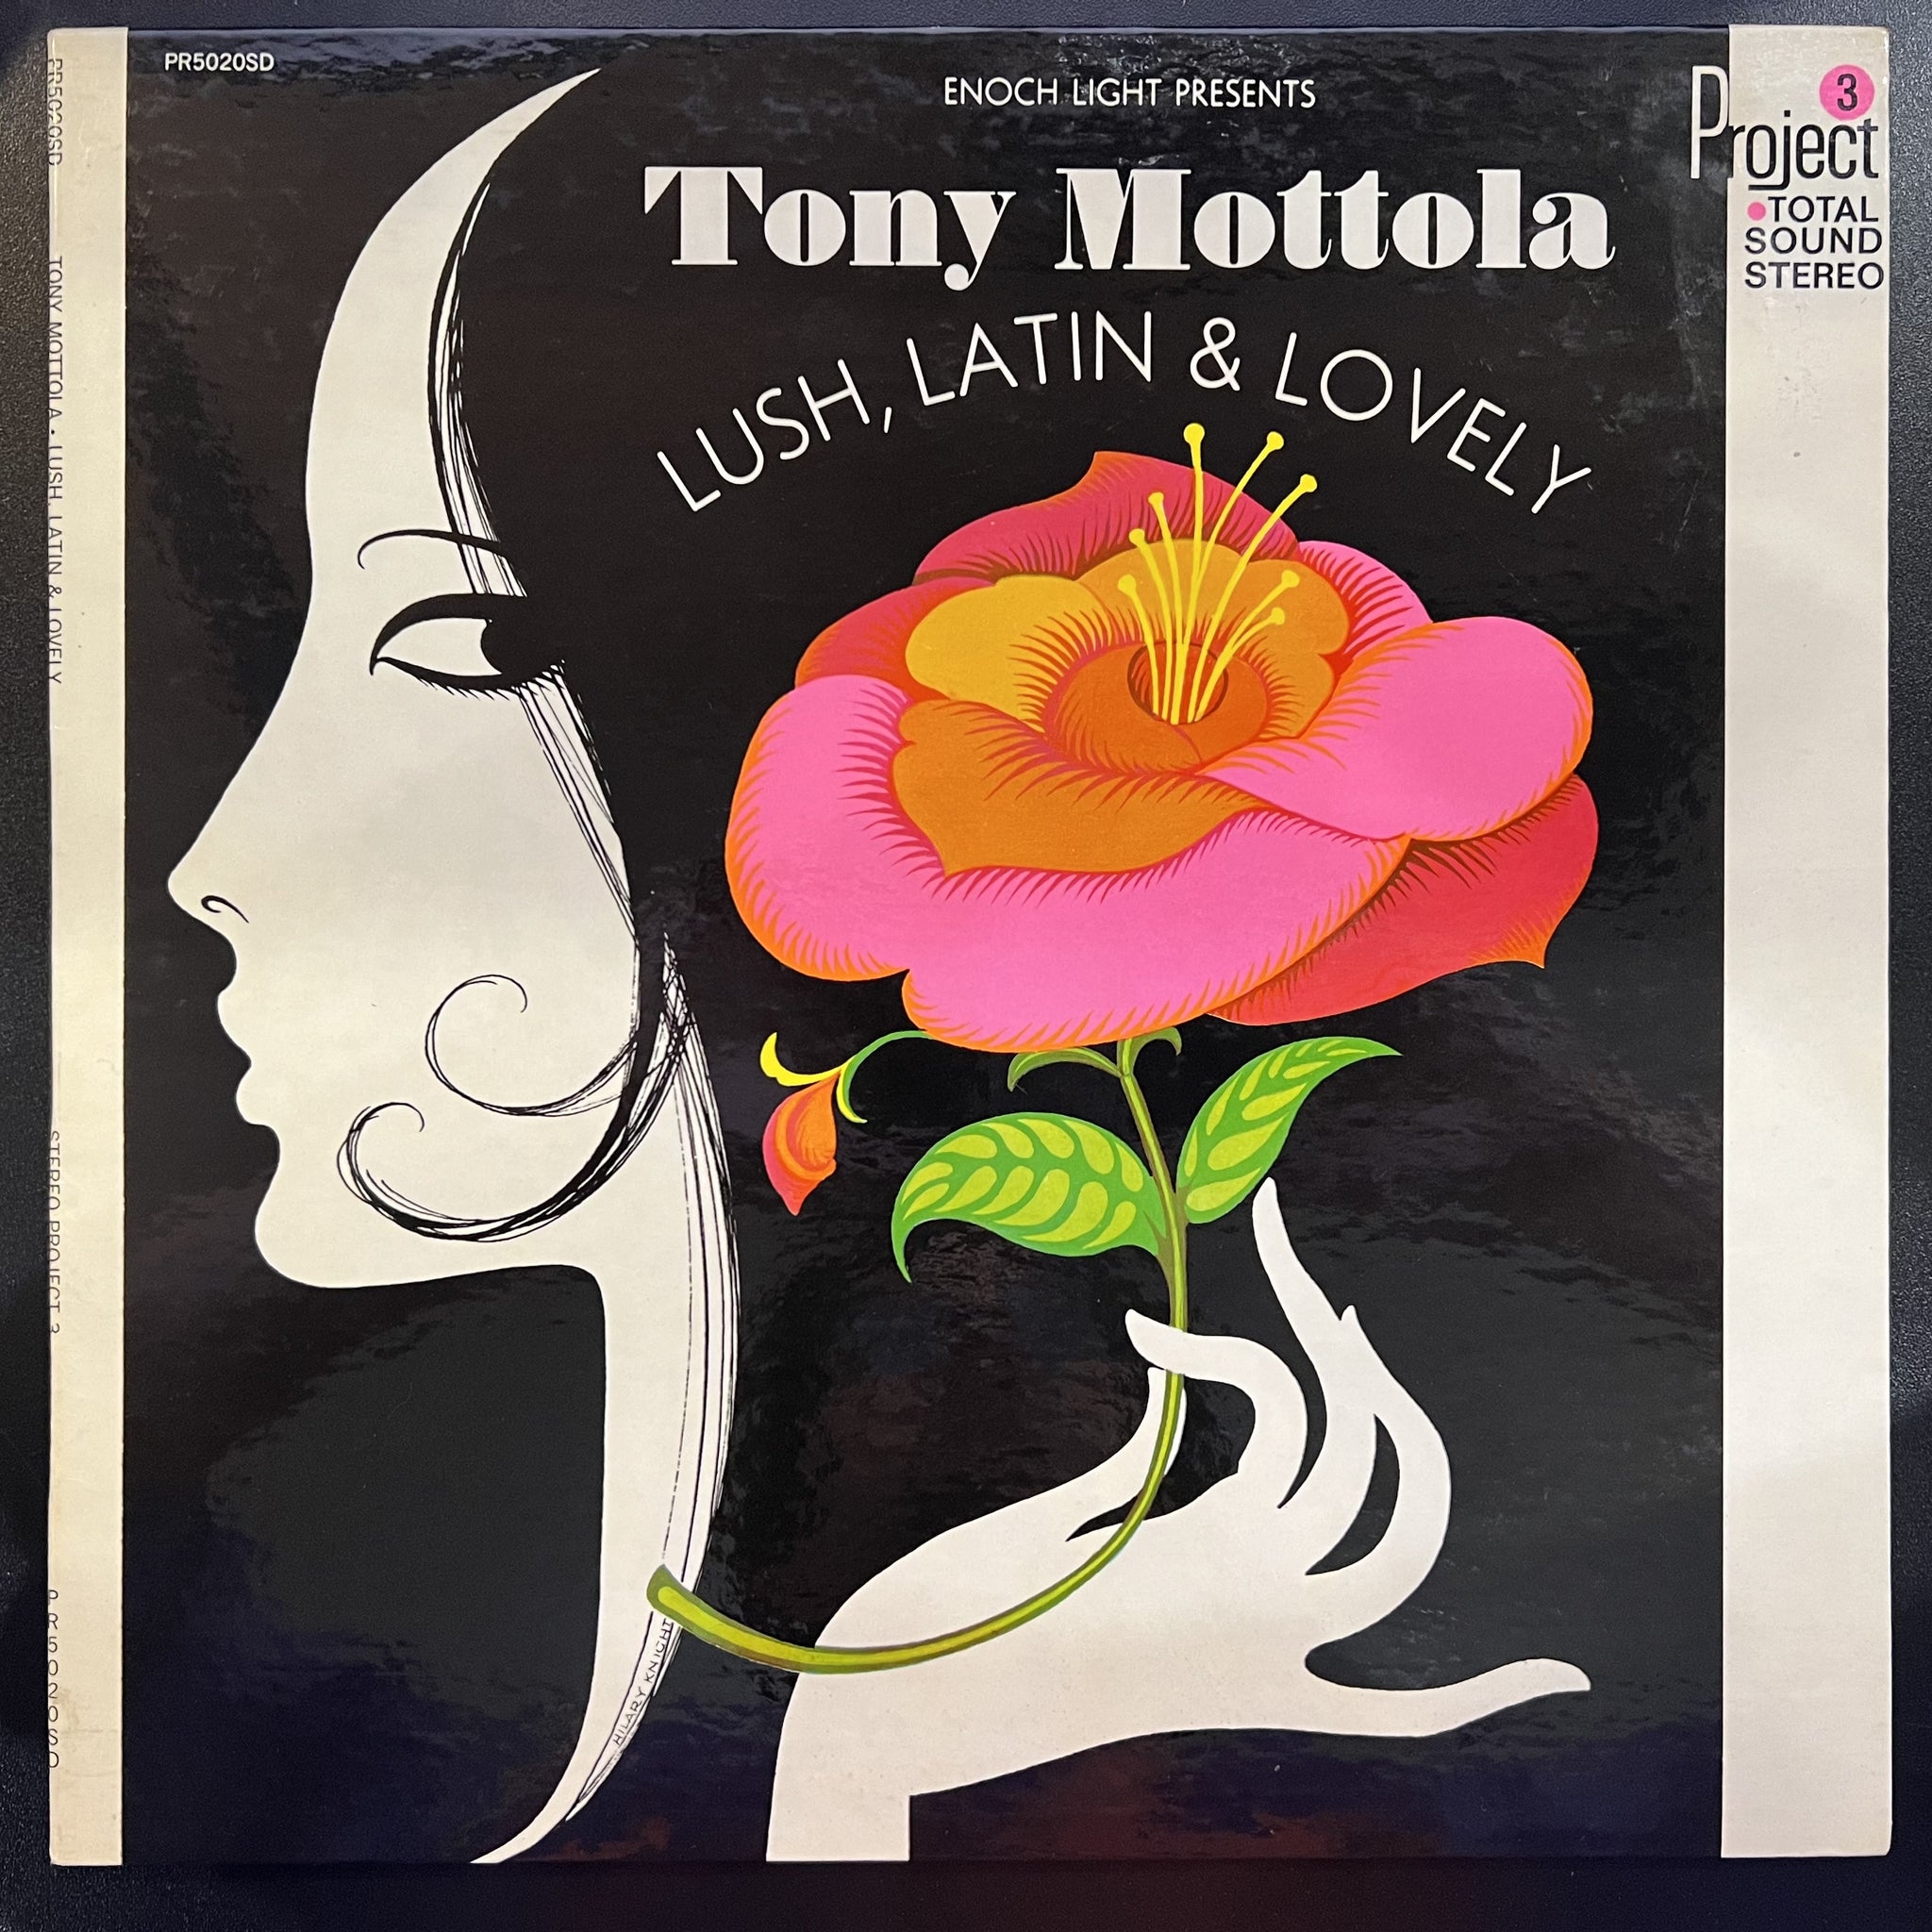 Tony Mottola – Lush, Latin & Lovely - Mint- LP Record 1967 Project 3 Total Sound USA Vinyl - Easy Listening / Instrumental / Jazz